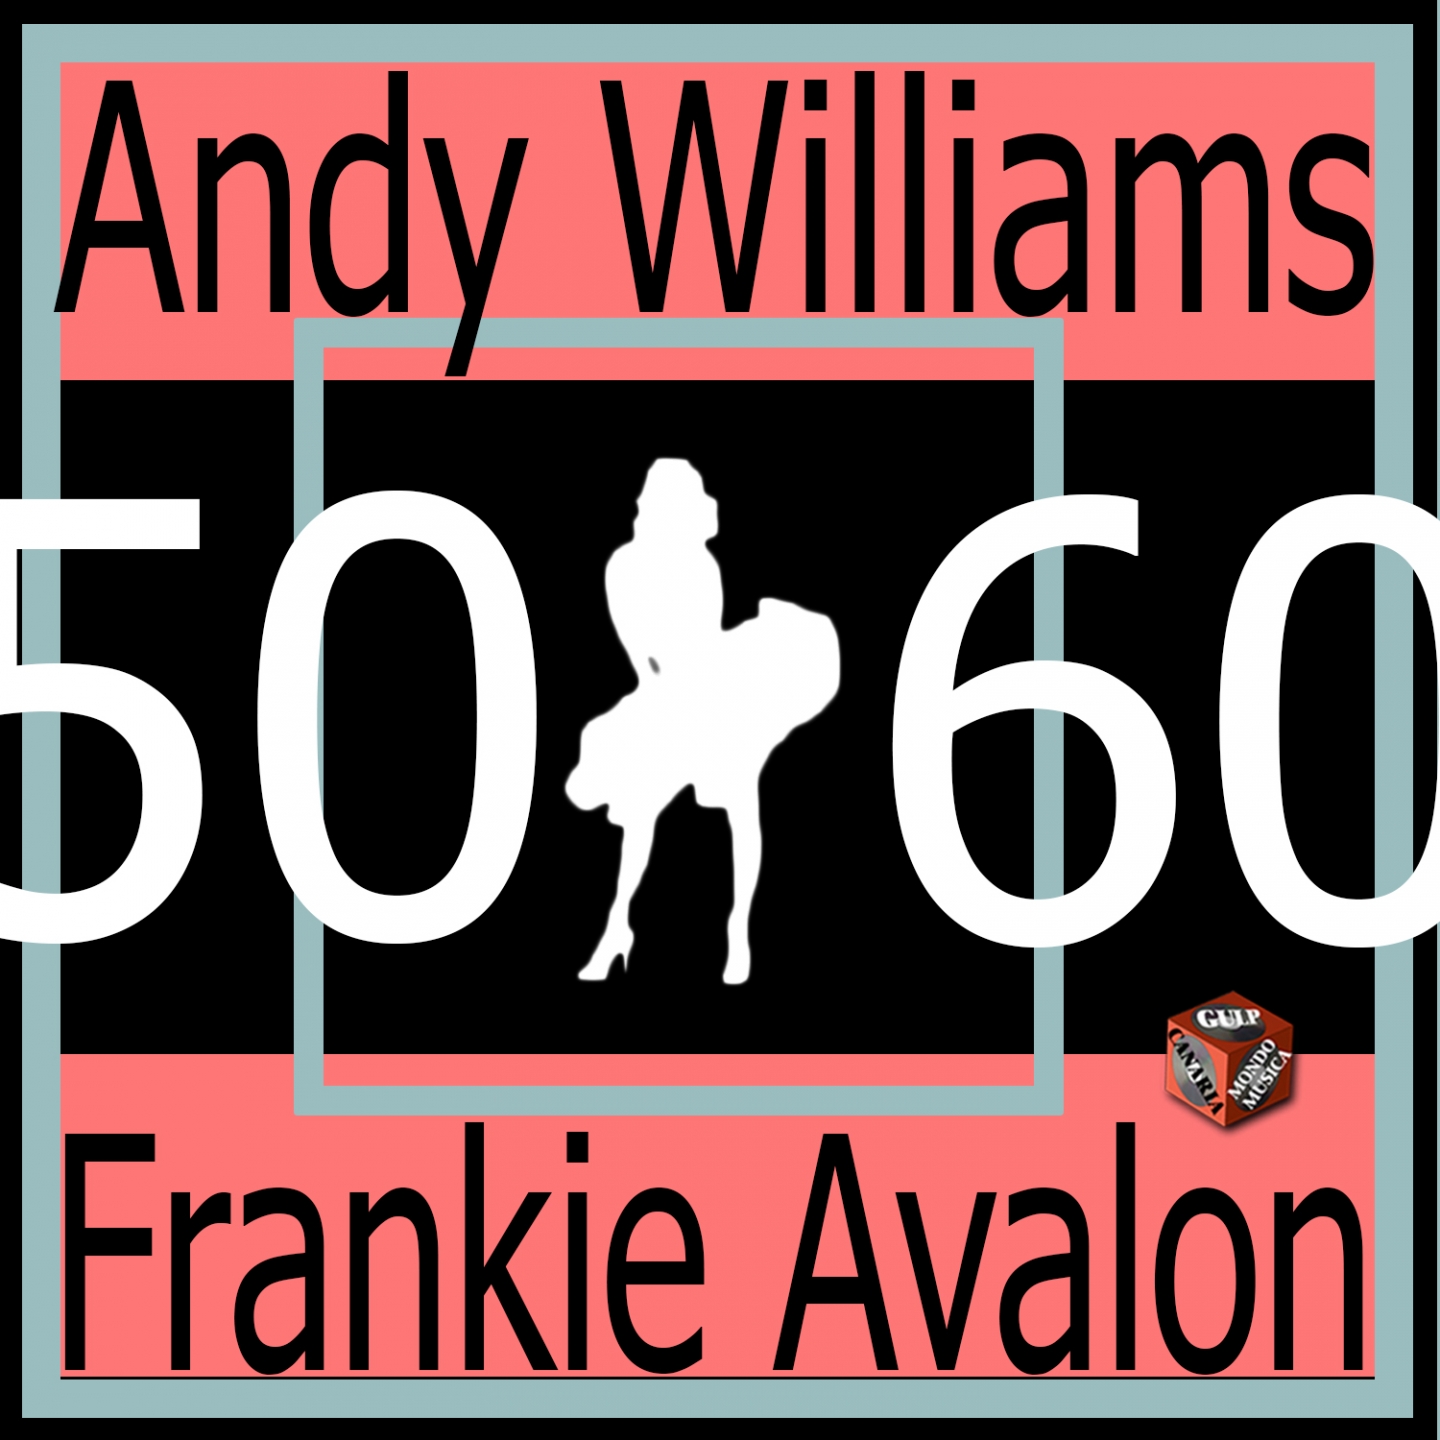 Frankie Avalon & Andy Williams